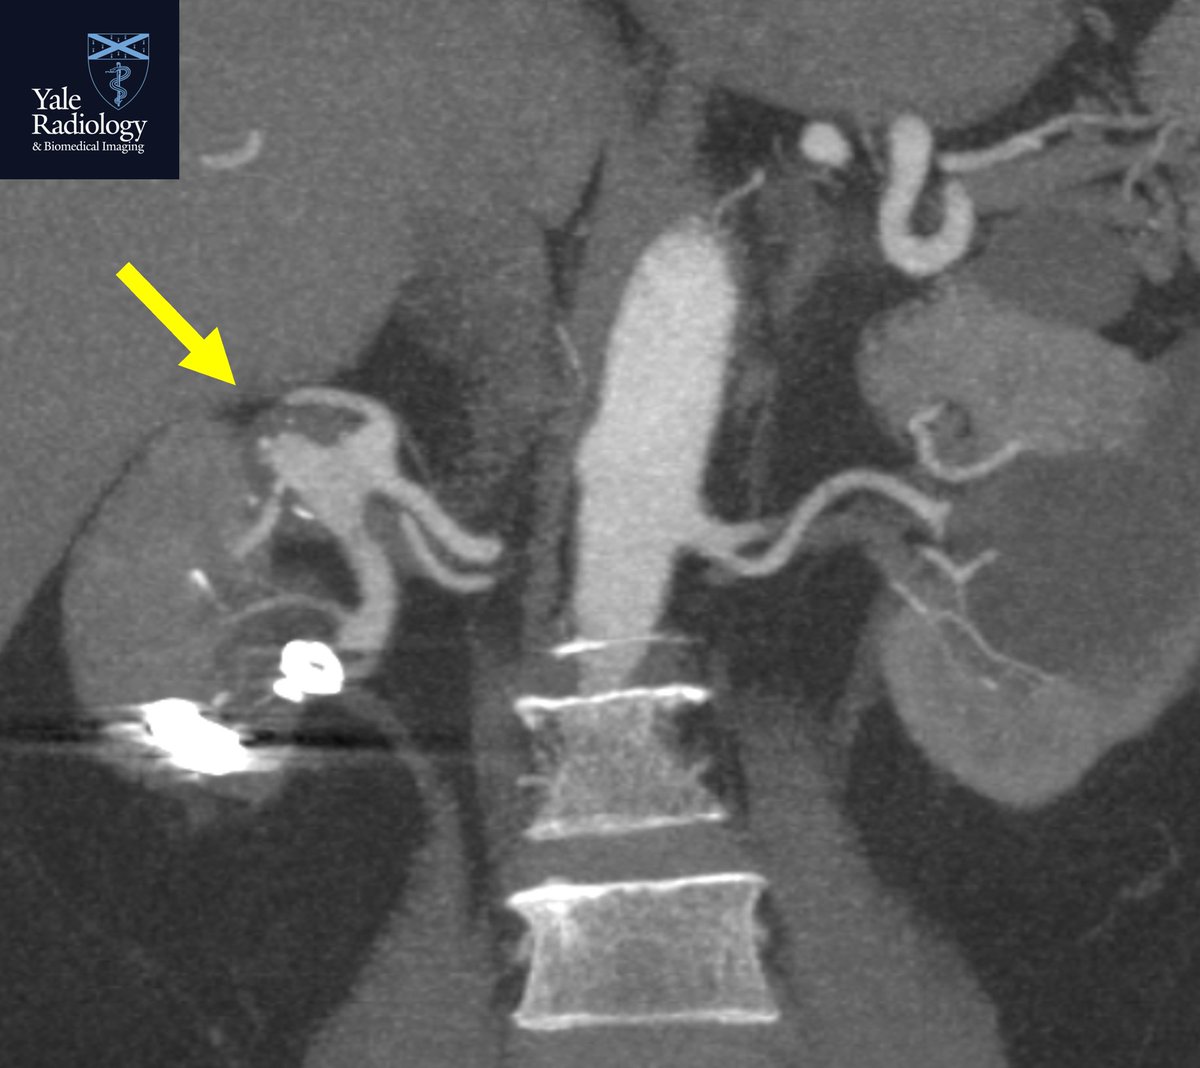 #MEDSTUDENTMONDAYS: 2-3 cm partially thrombosed right renal artery aneurysm nicely depicted on this CTA MIP image #yaleradedu #yaleradiology #MedStudentMondays #FOAMrad #FOAMed #radres @Mahan_Mathur @YaleRadiology #MedTwitter